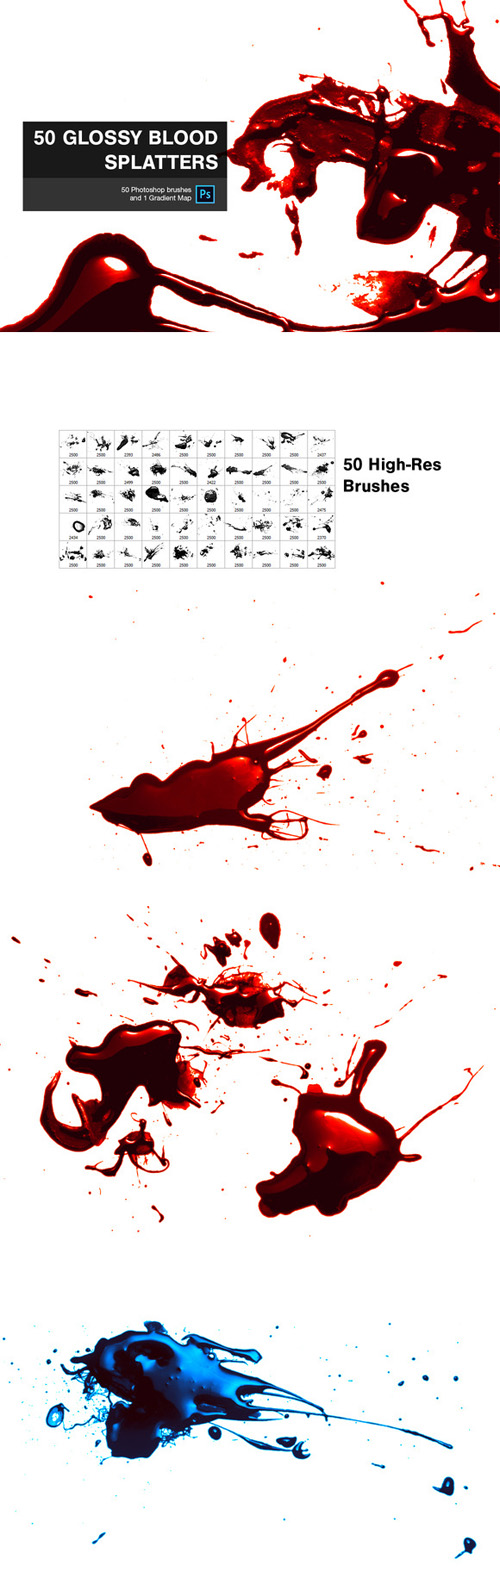 CreativeMarket - 50 Glossy Blood Splatters 90828